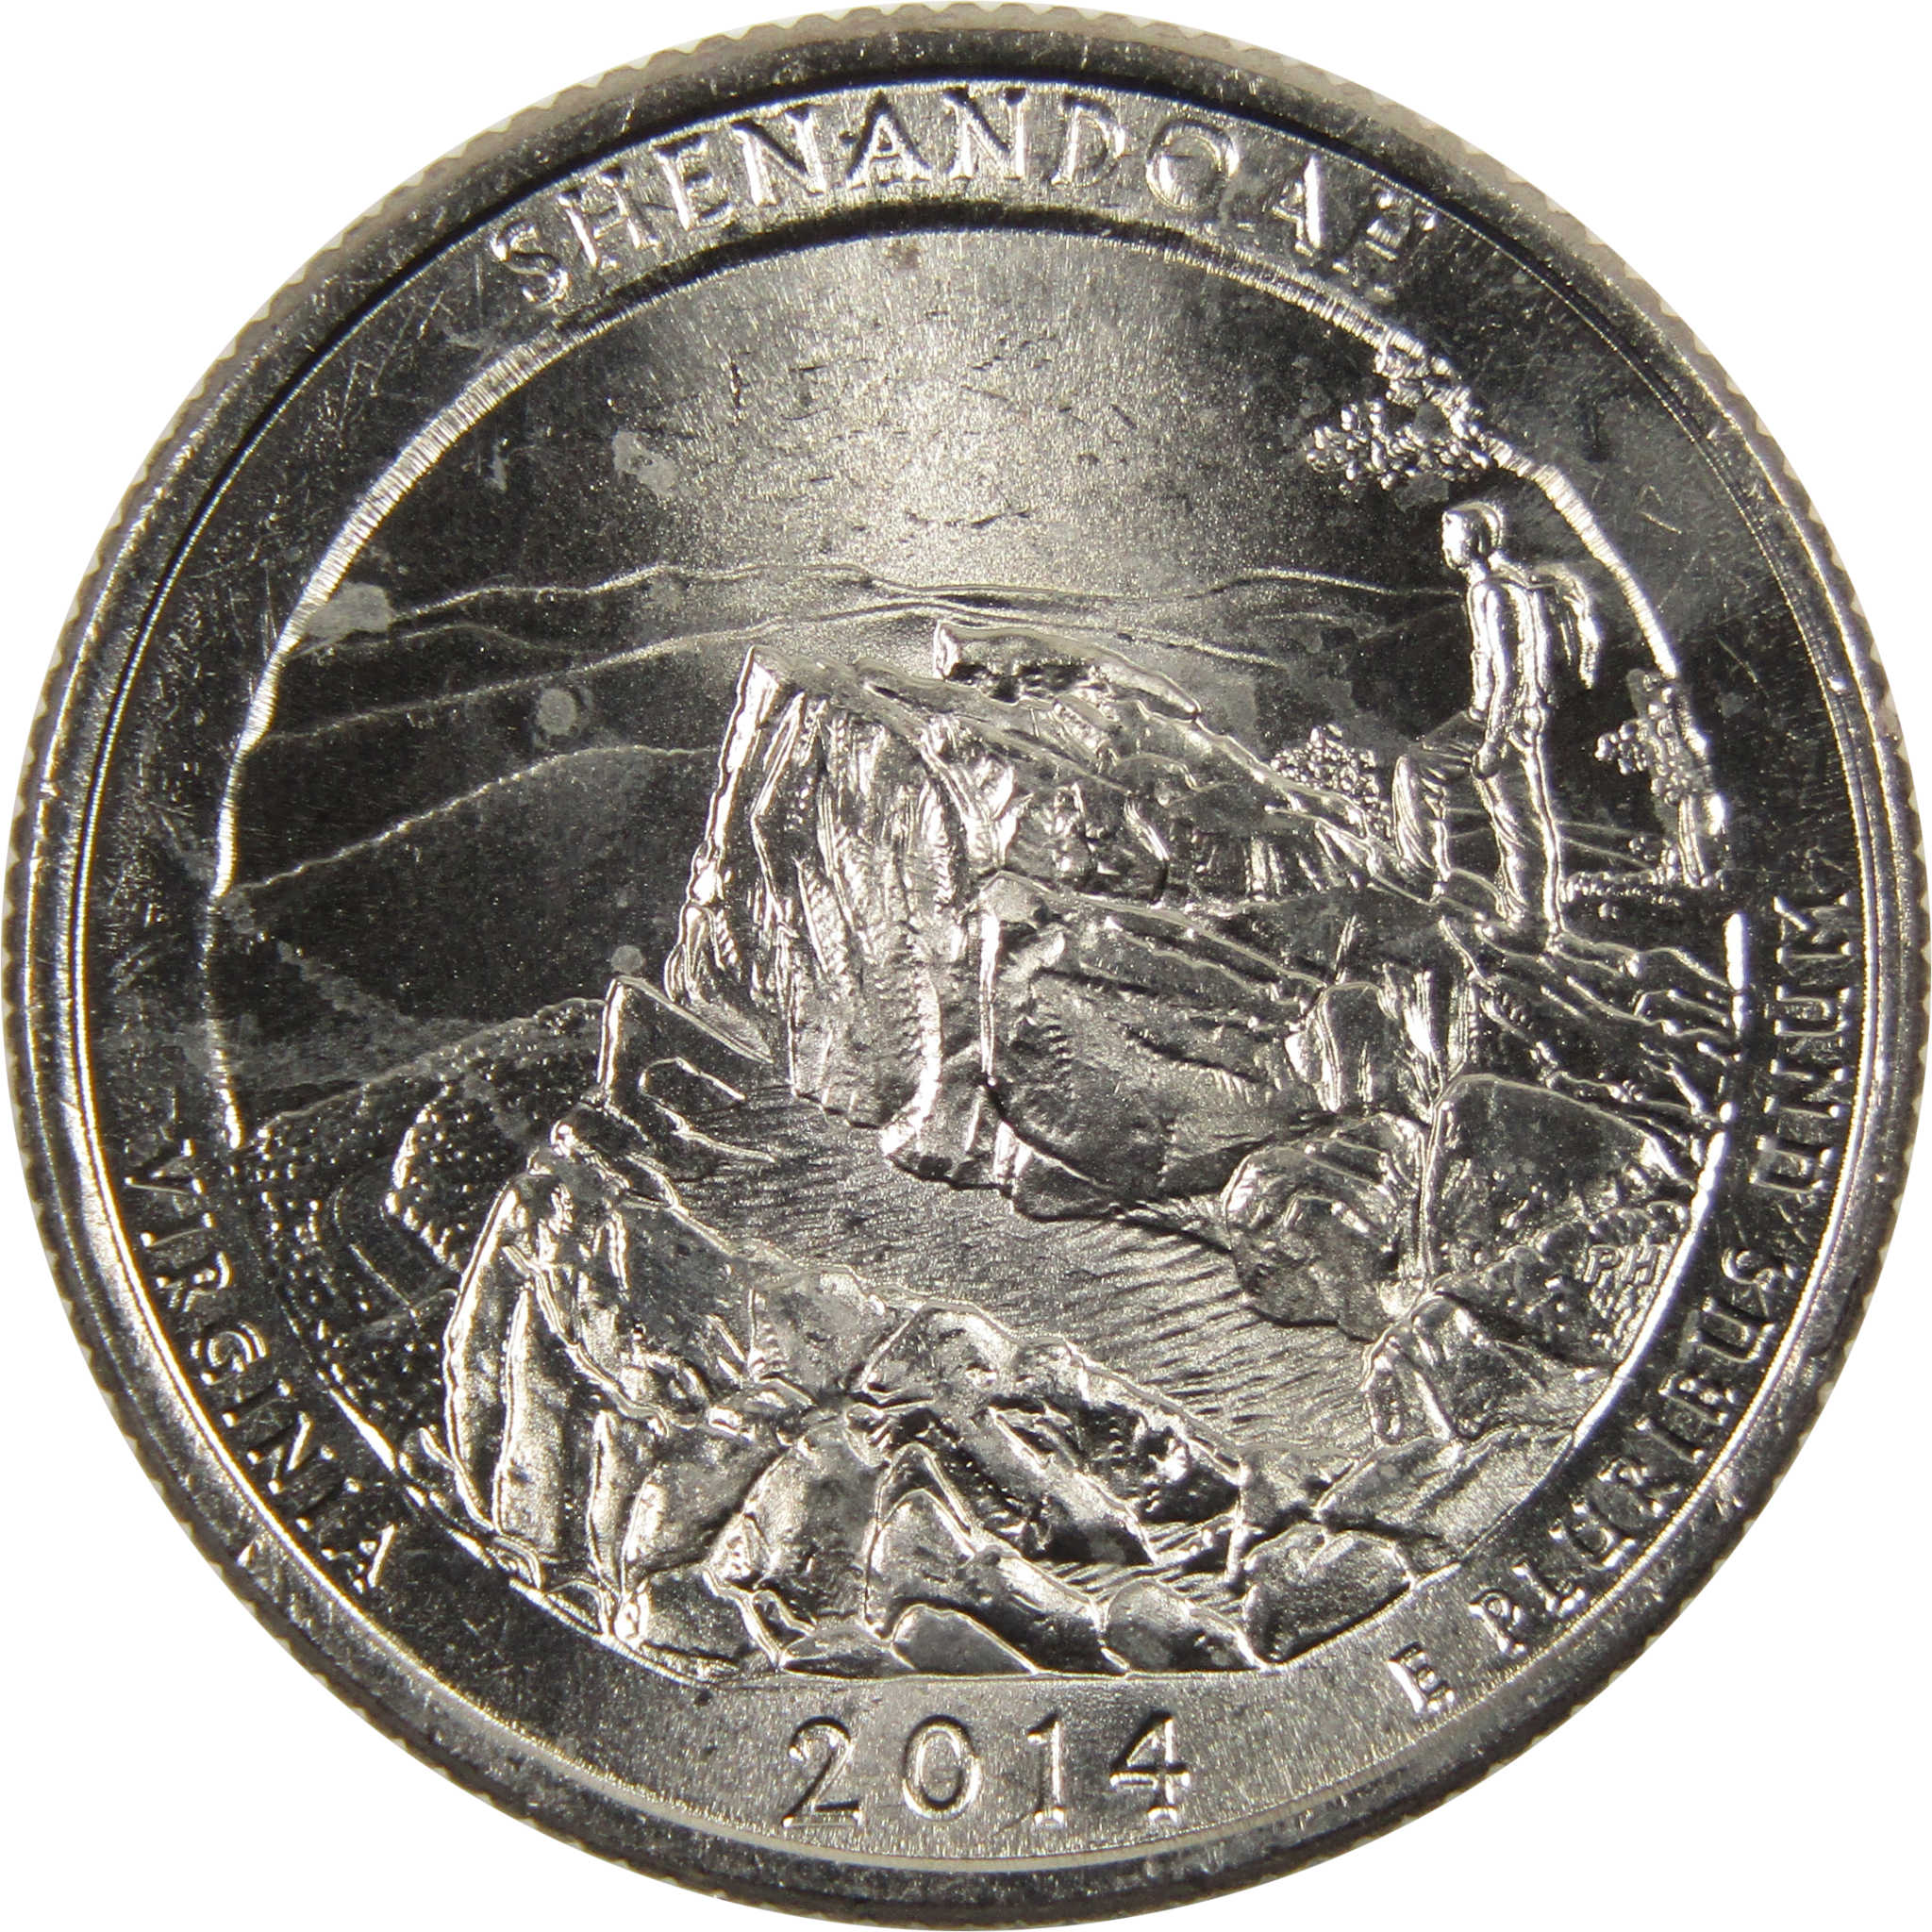 2014 P Shenandoah National Park Quarter BU Uncirculated Clad 25c Coin